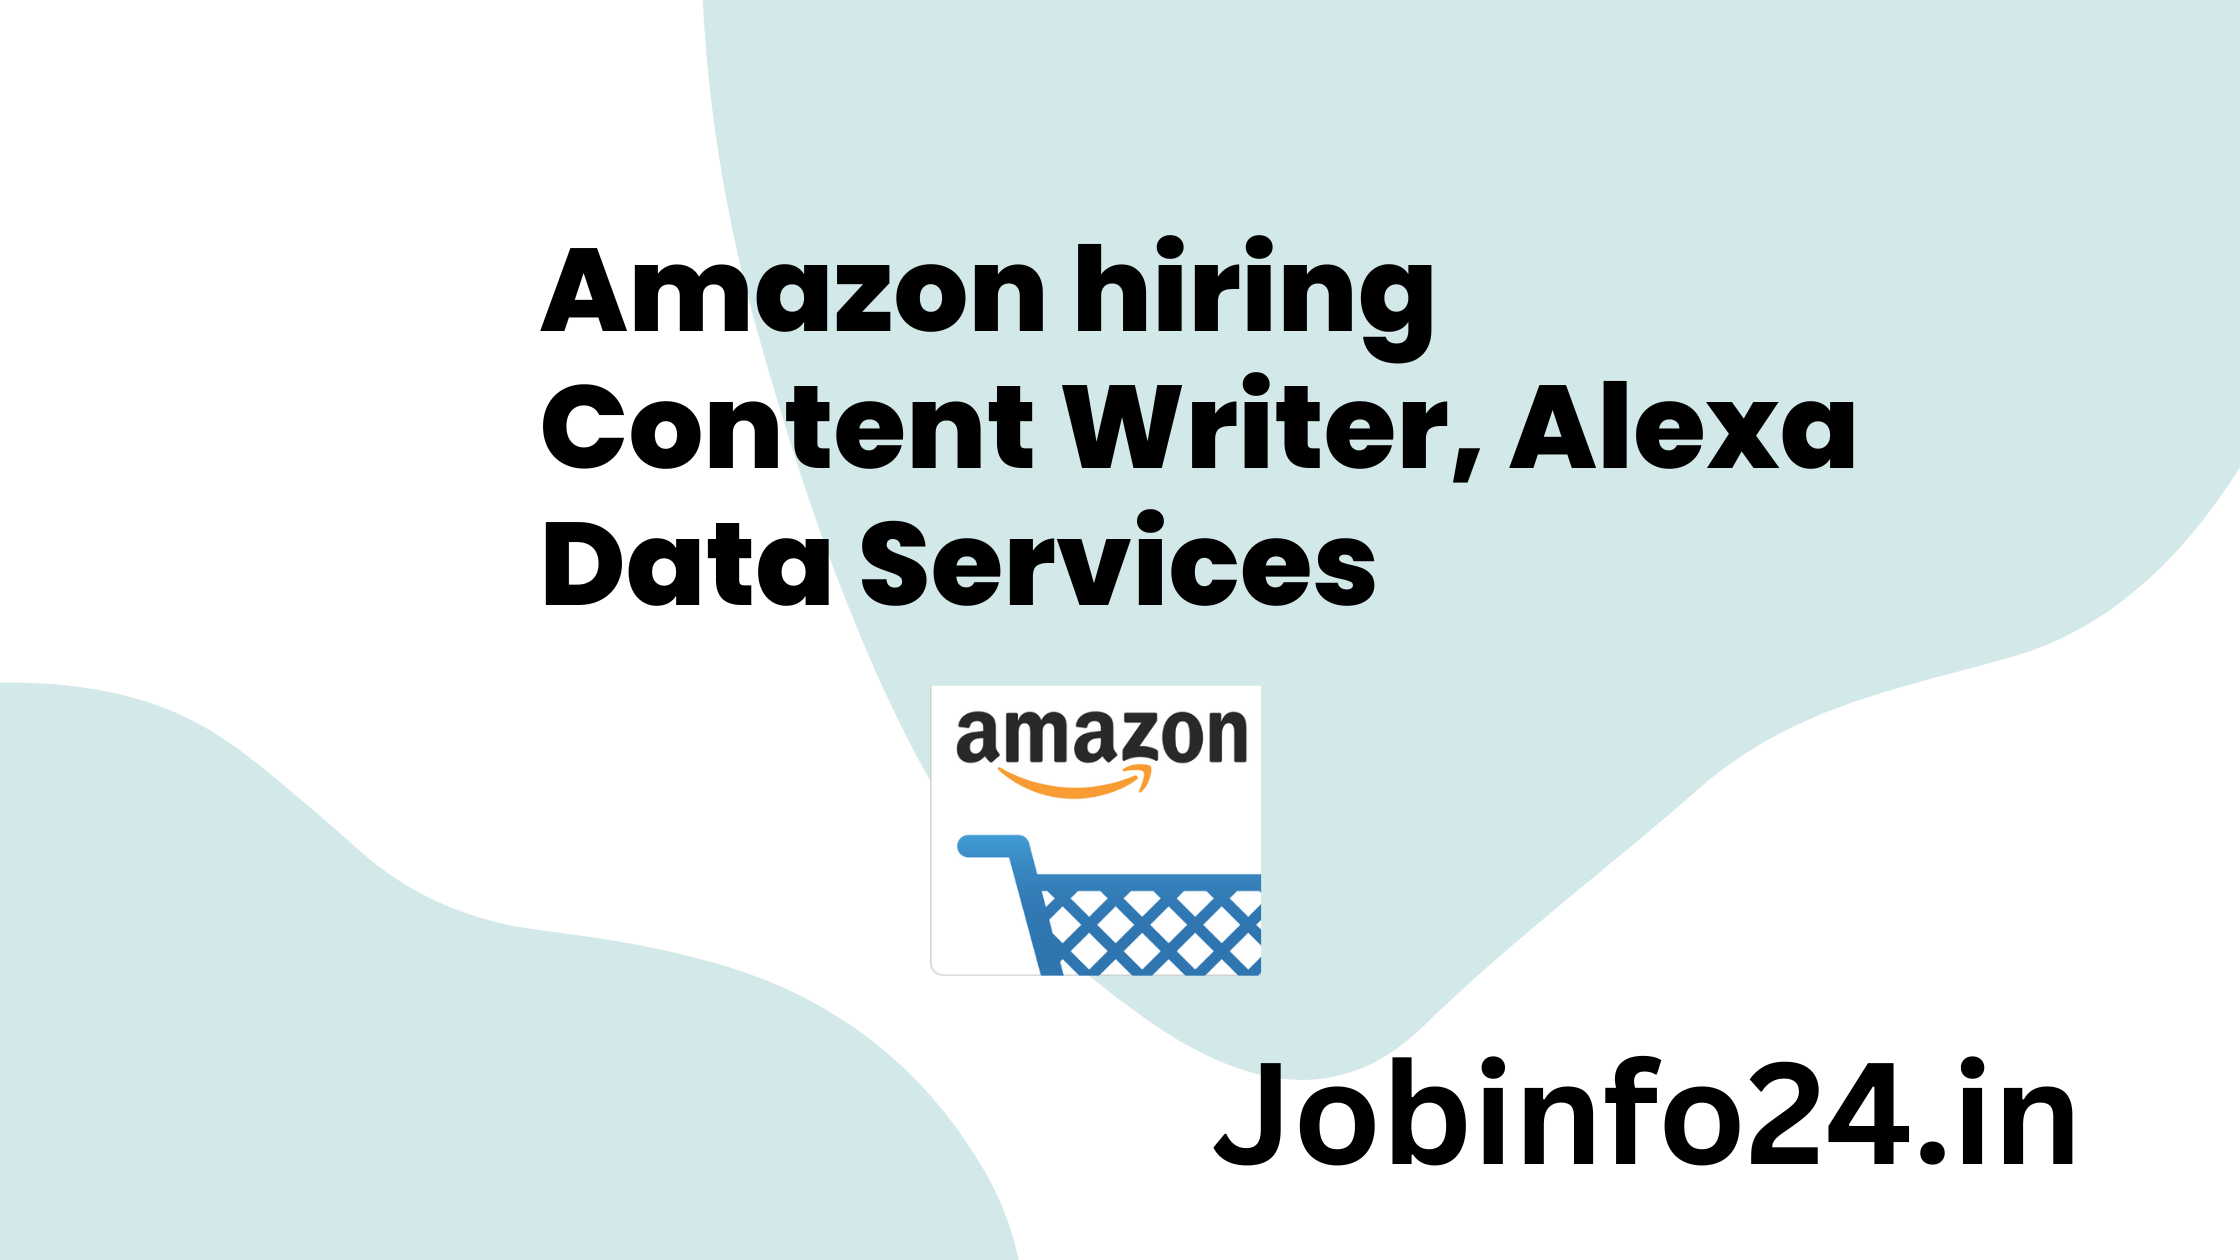 Amazon hiring Content Writer, Alexa Data Services